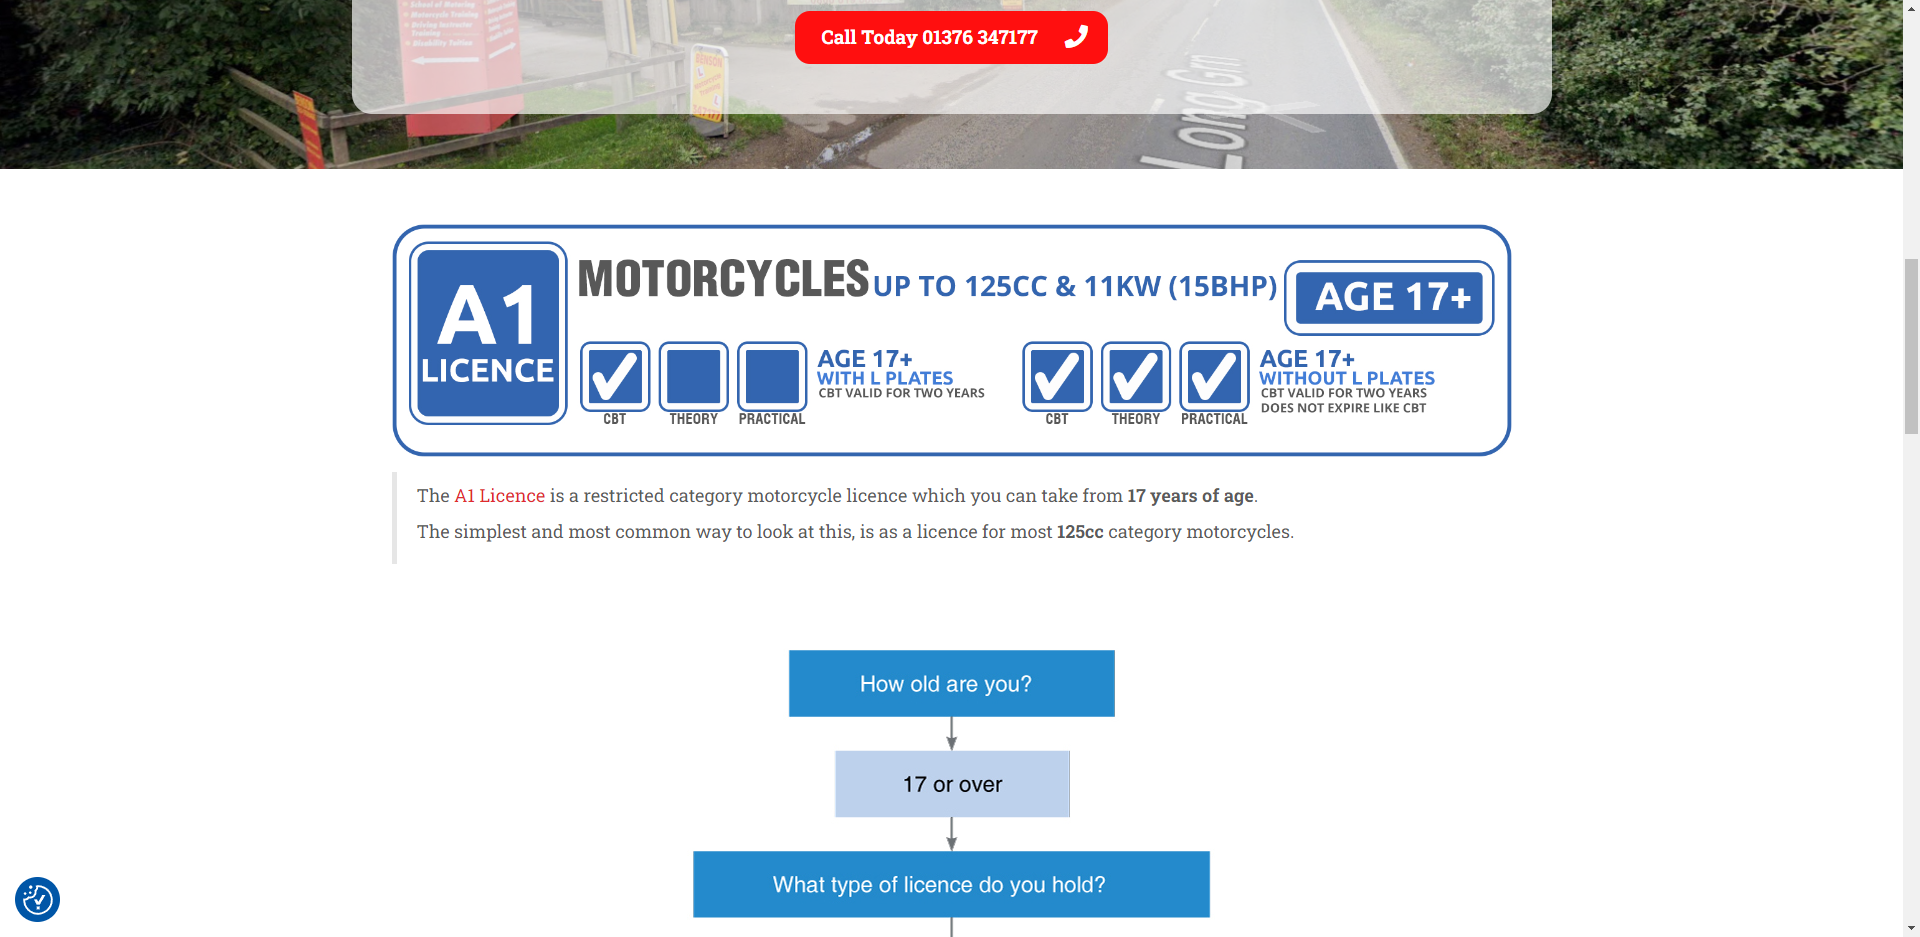 bensonmotorcycletraining.co.uk_a1-licence-training_